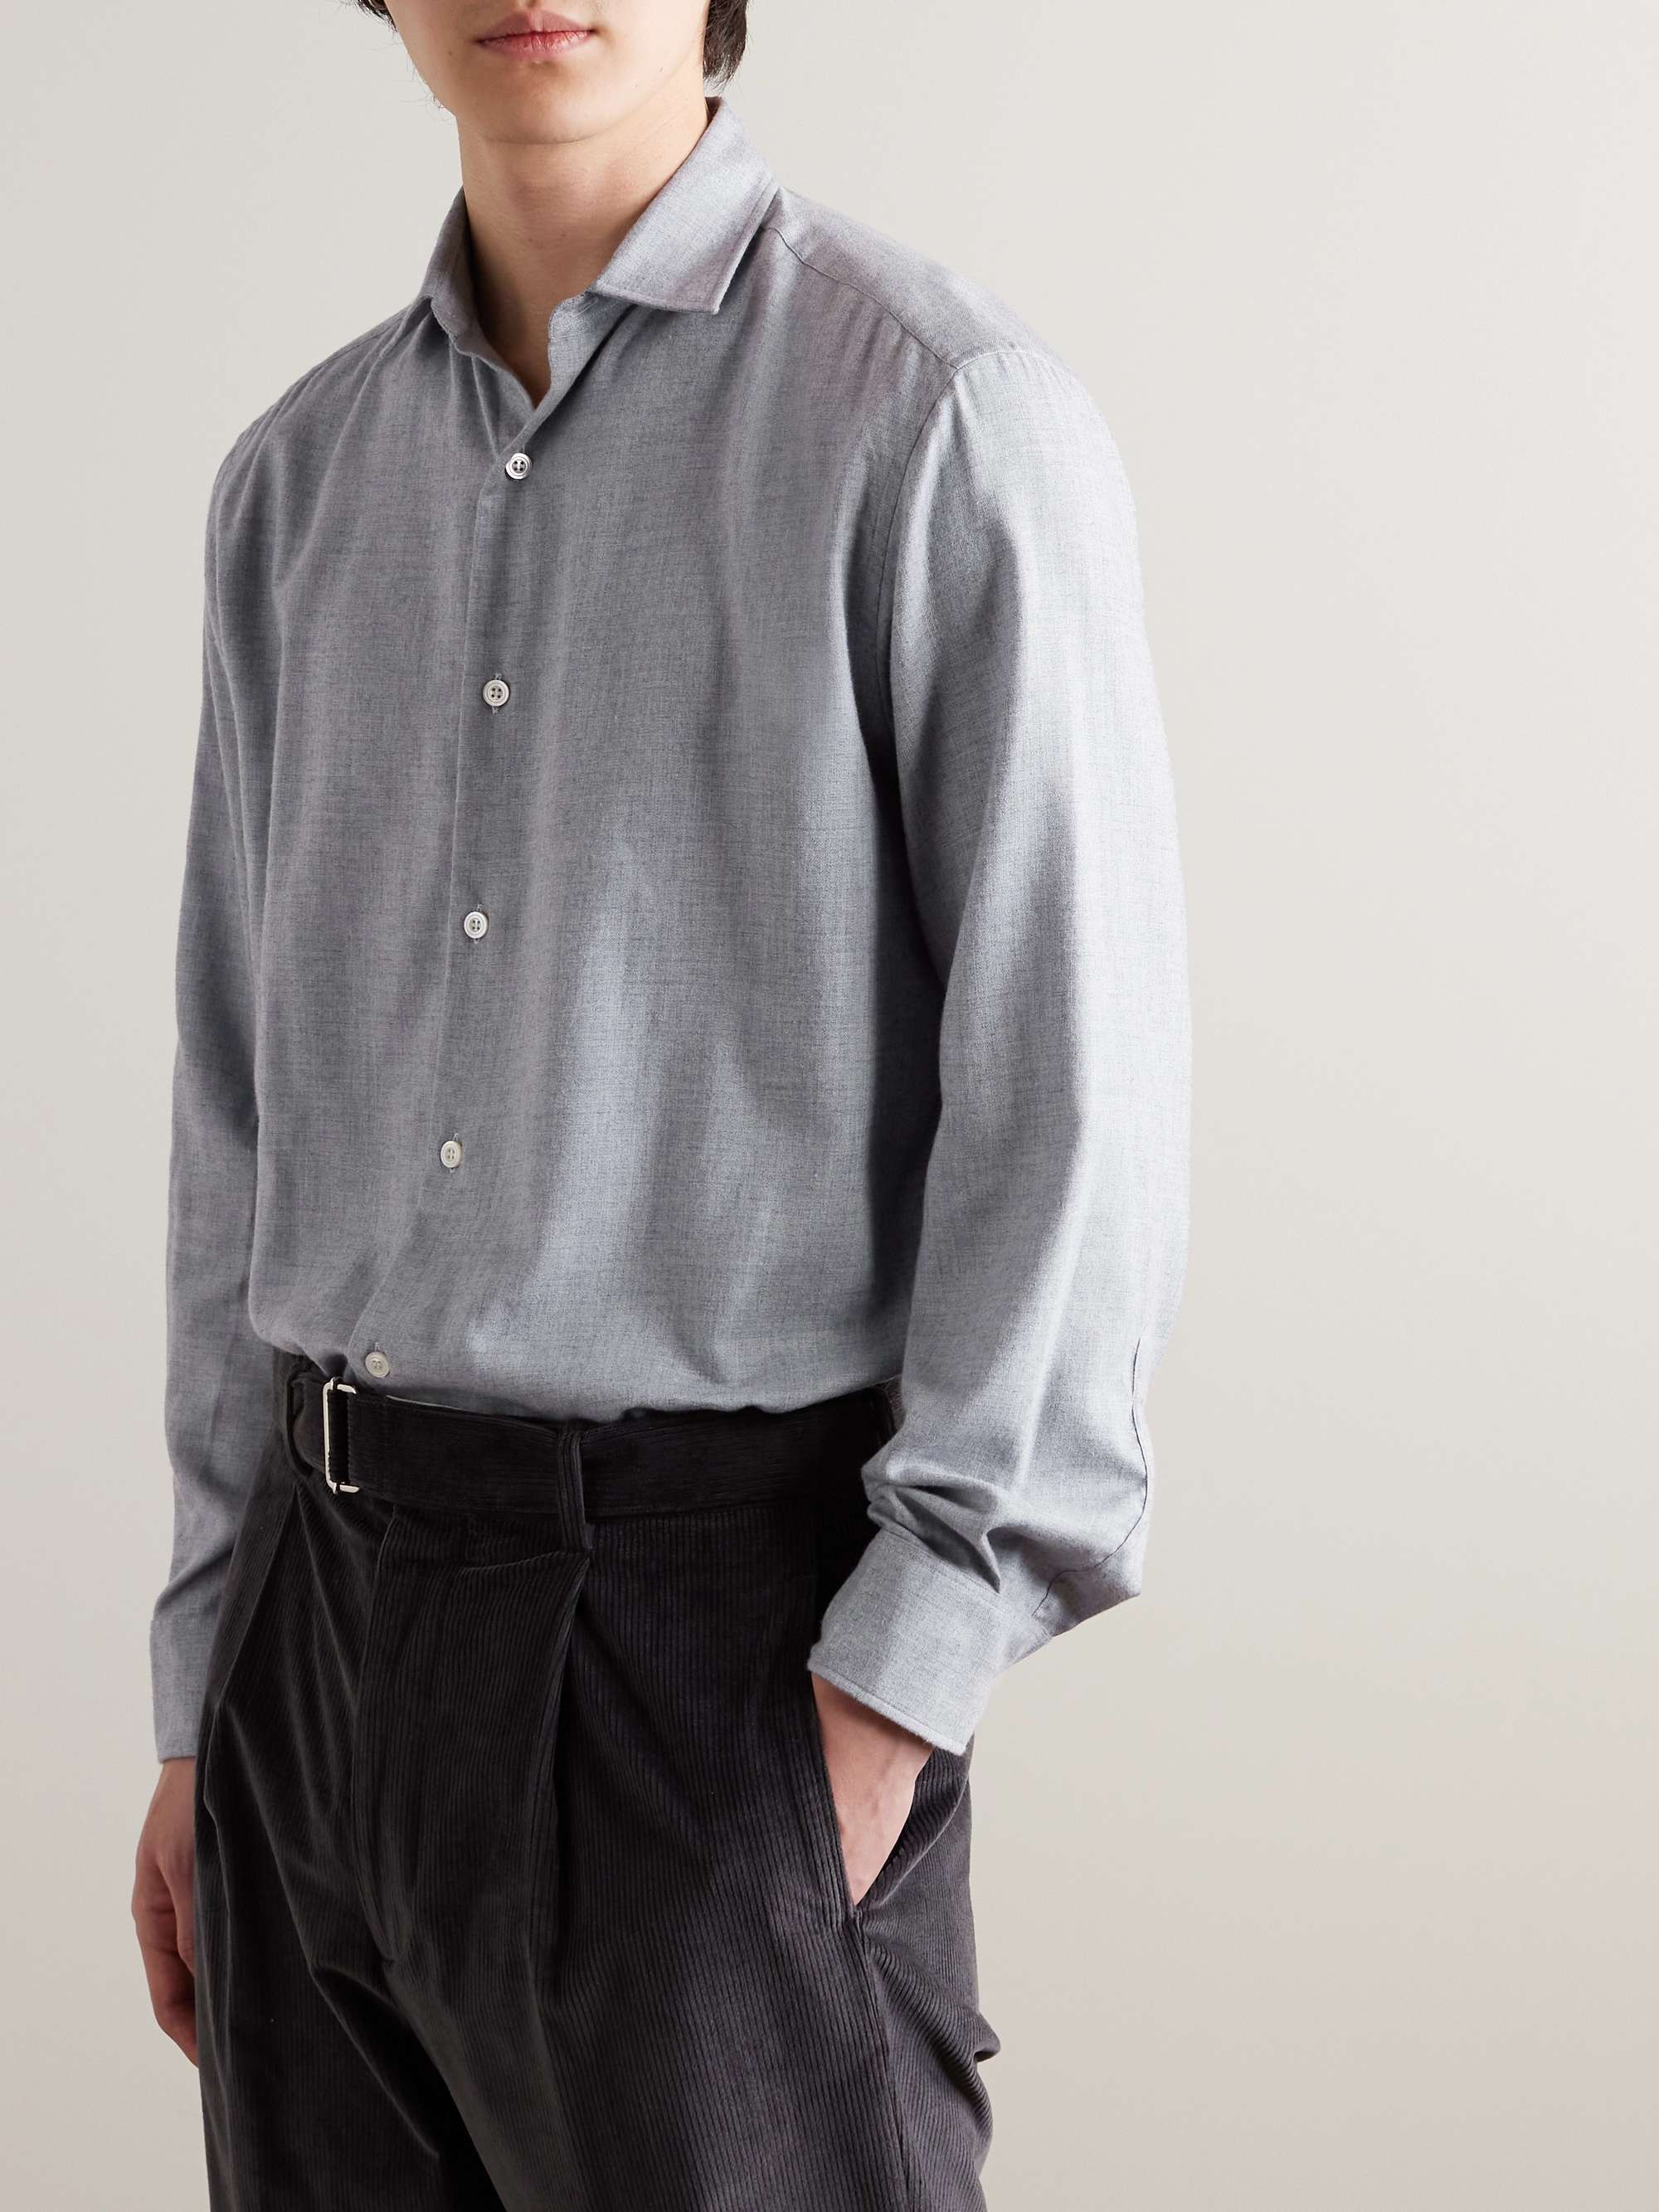 CHARVET Cotton and Wool-Blend Flannel Shirt